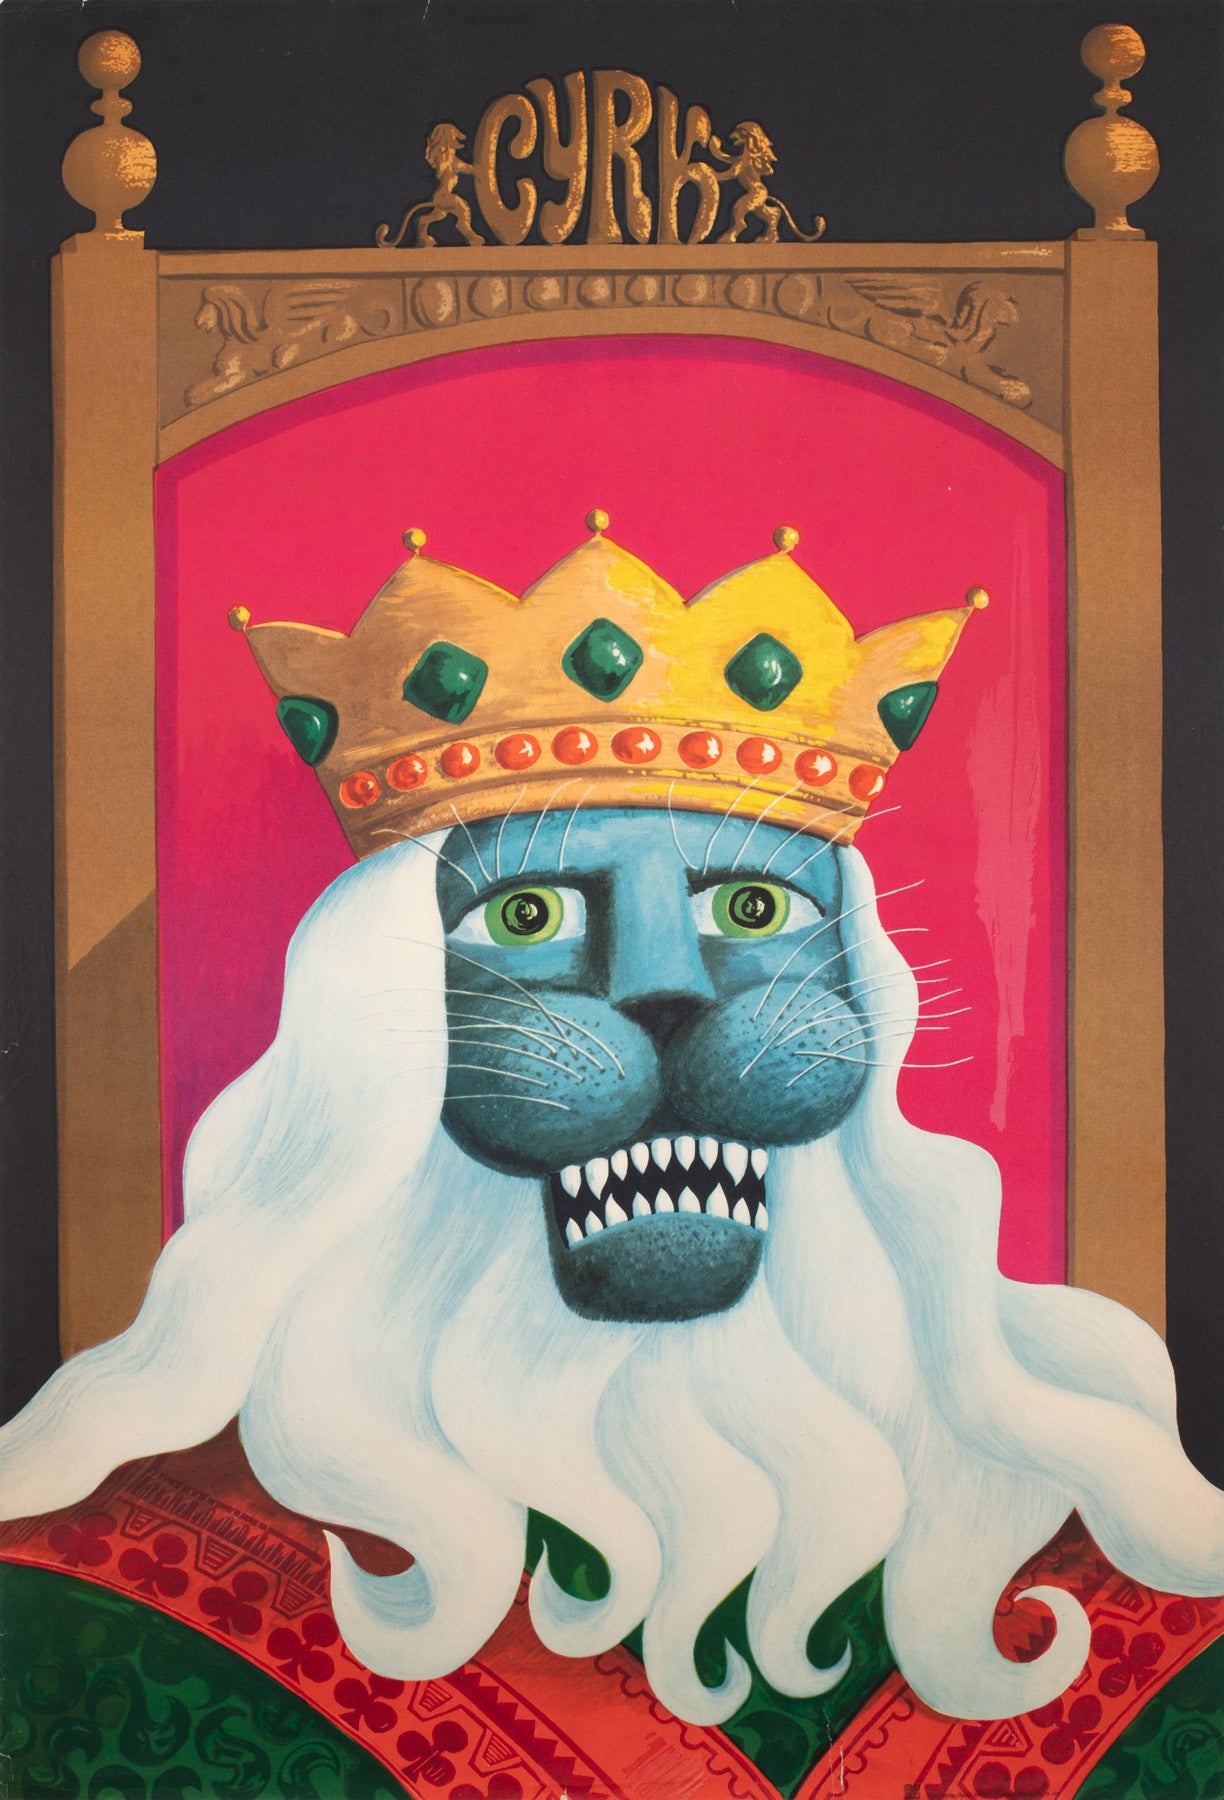 Cyrk Lion King 1975 Polish Circus Poster, Hilscher